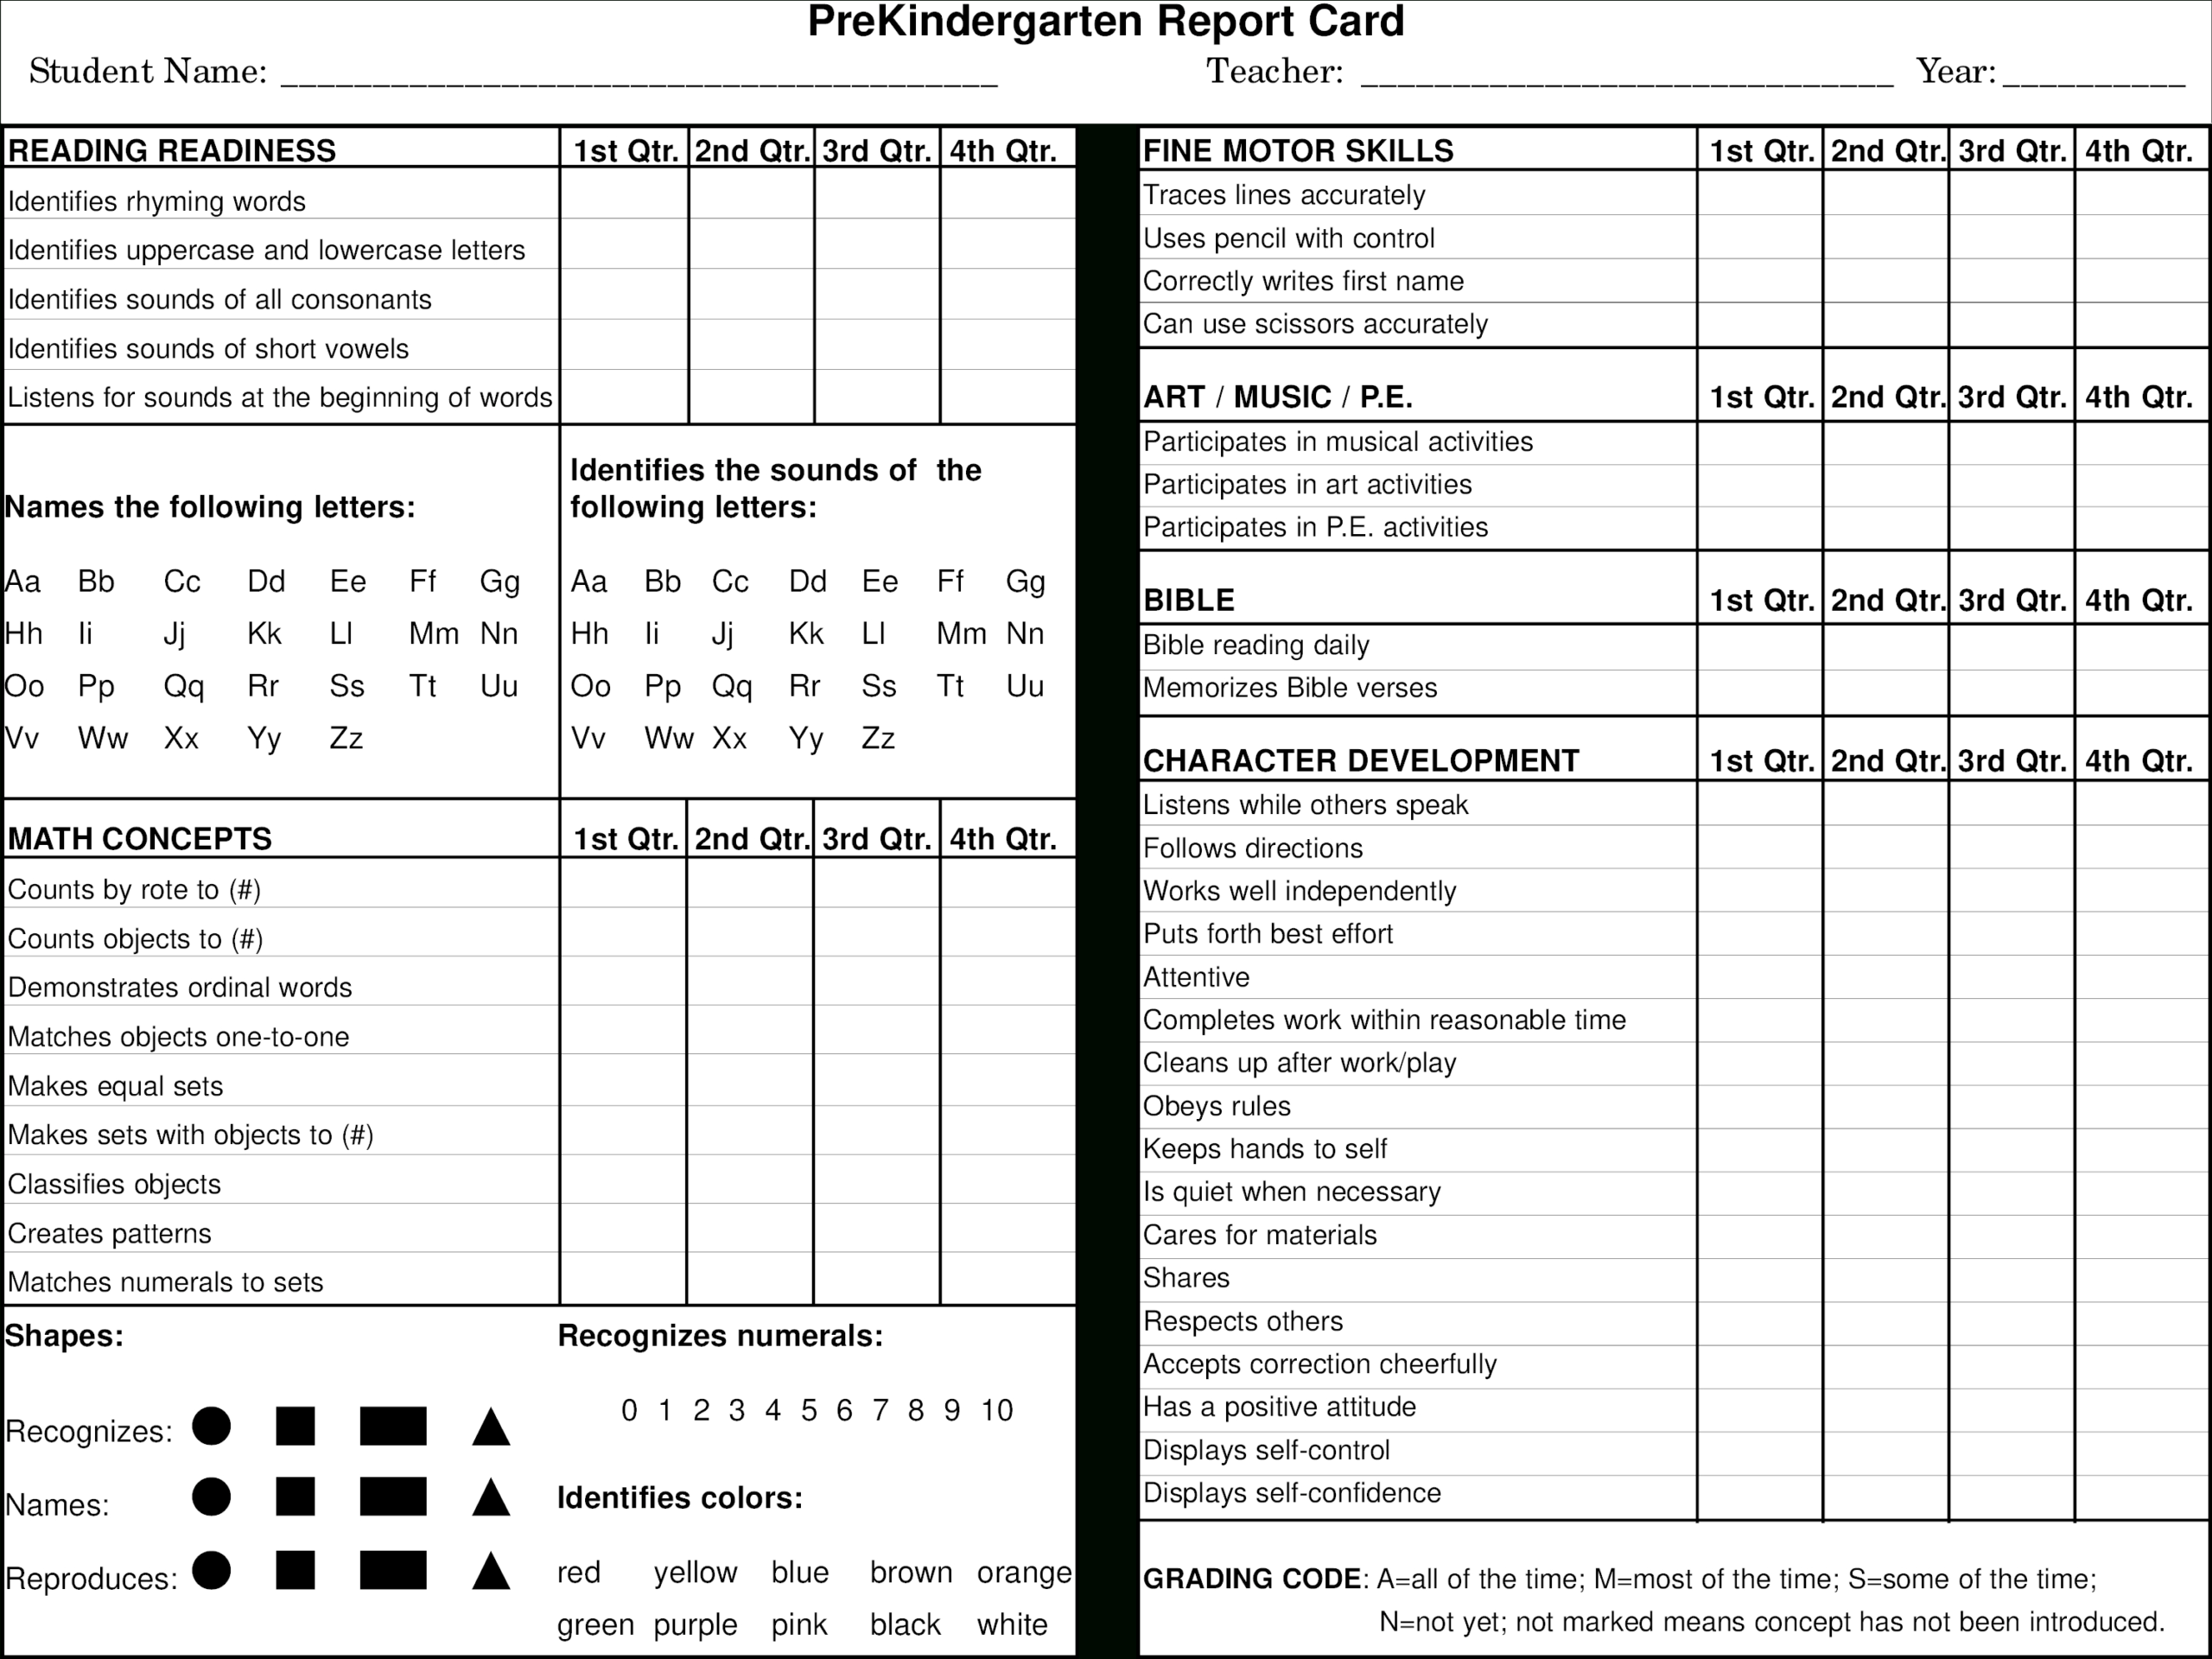 Preschool Report Card Main Image – Preschool Progress Report With Character Report Card Template